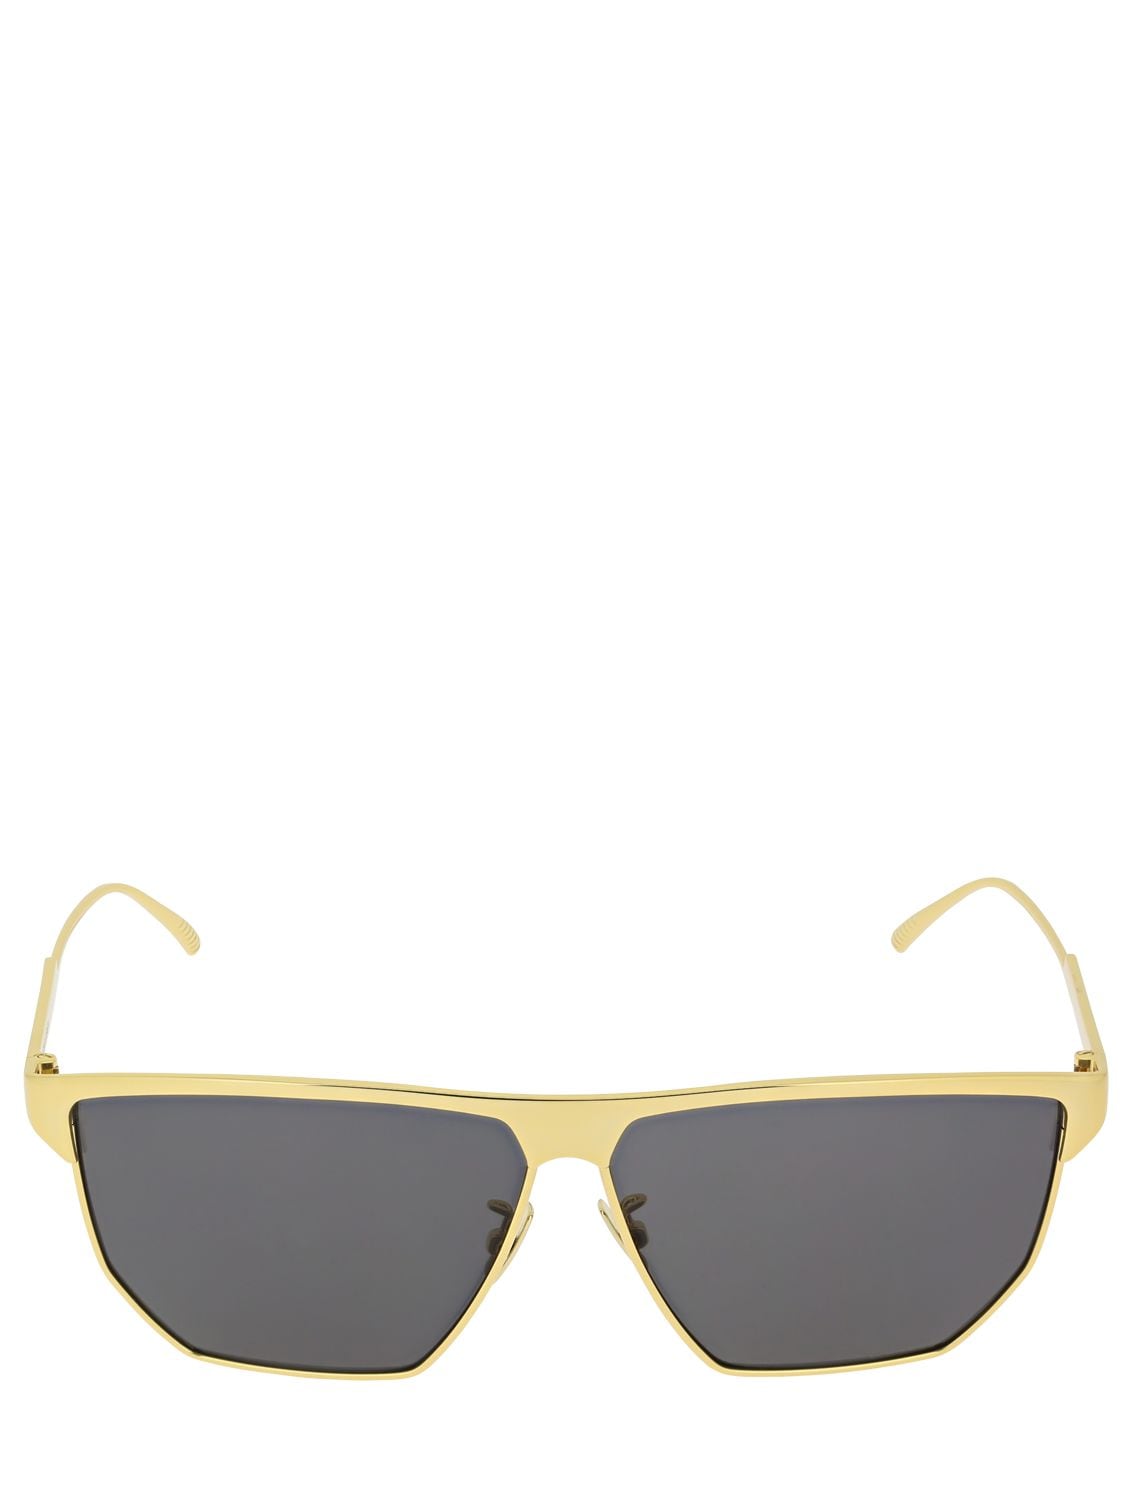 Bv1069s Squared Metal Sunglasses